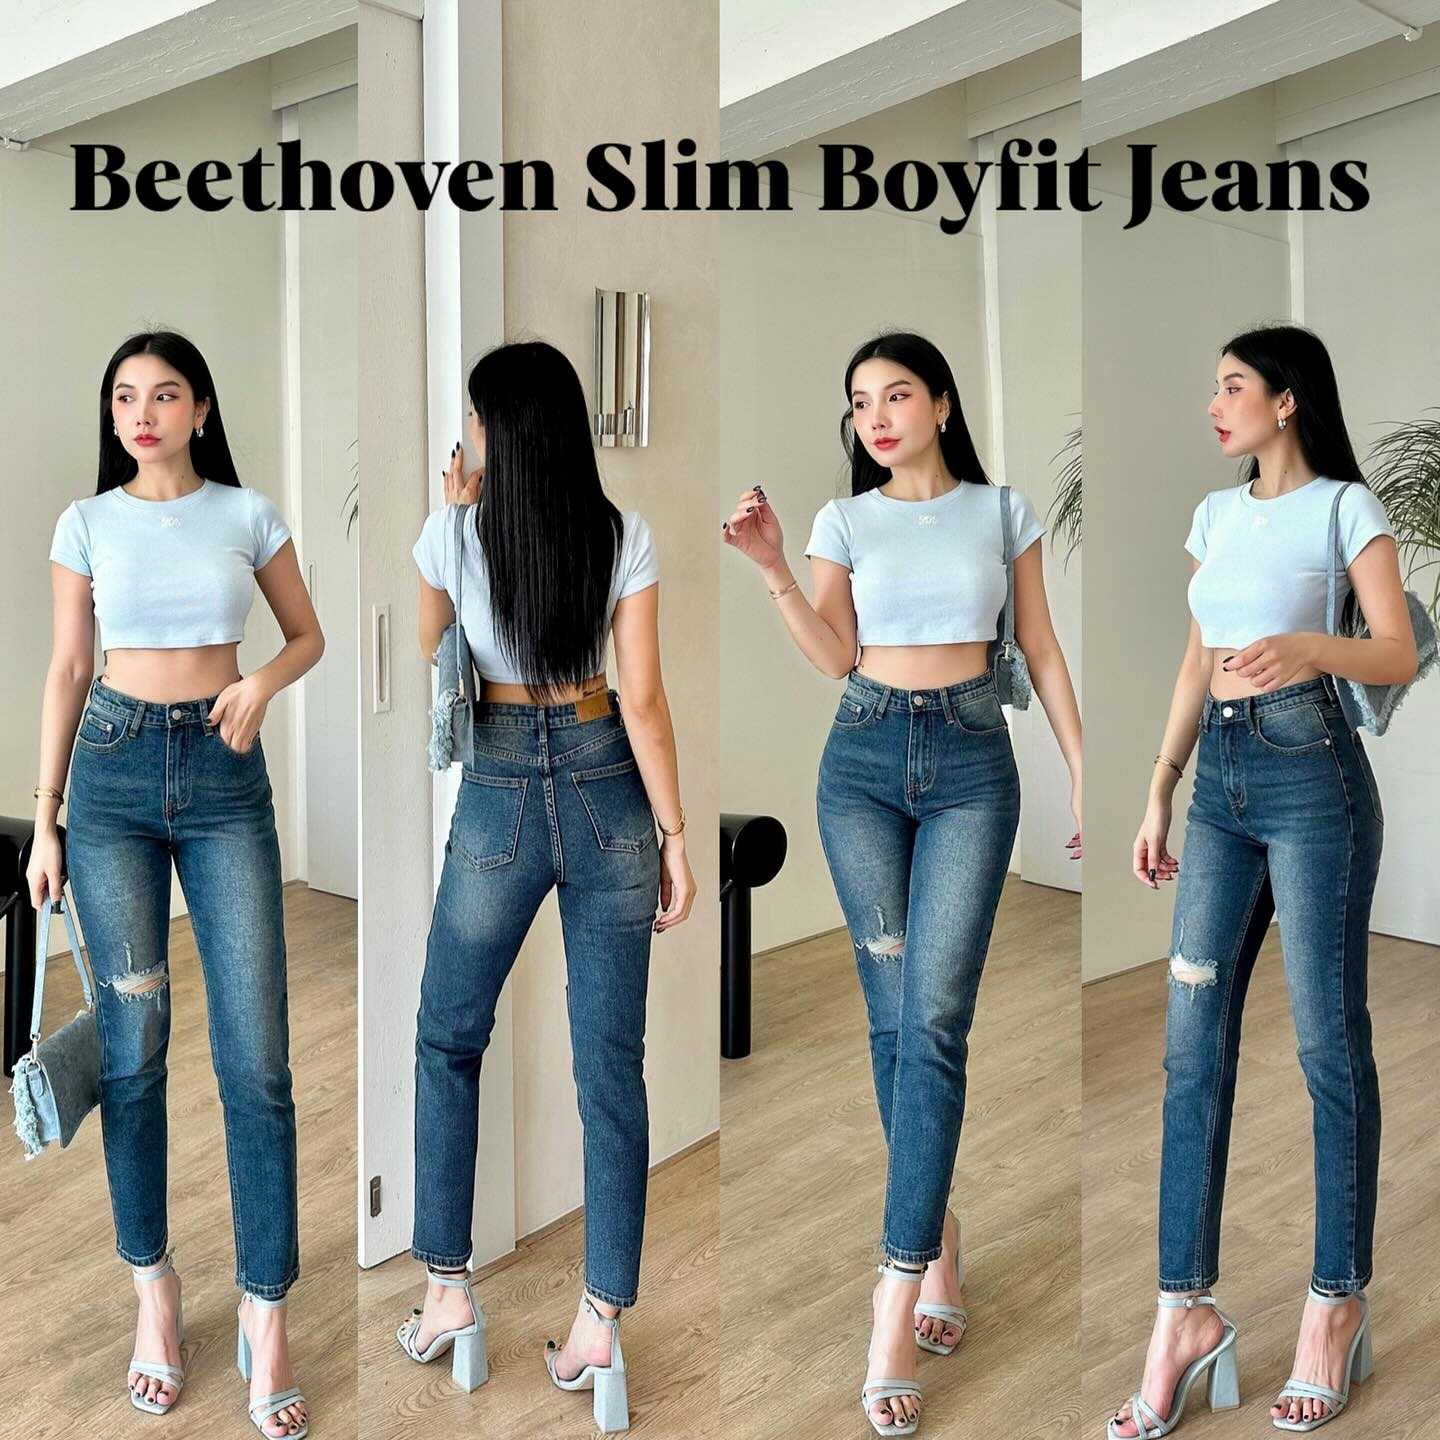 TLP0488  Beethoven Slim Boyfit Jeans